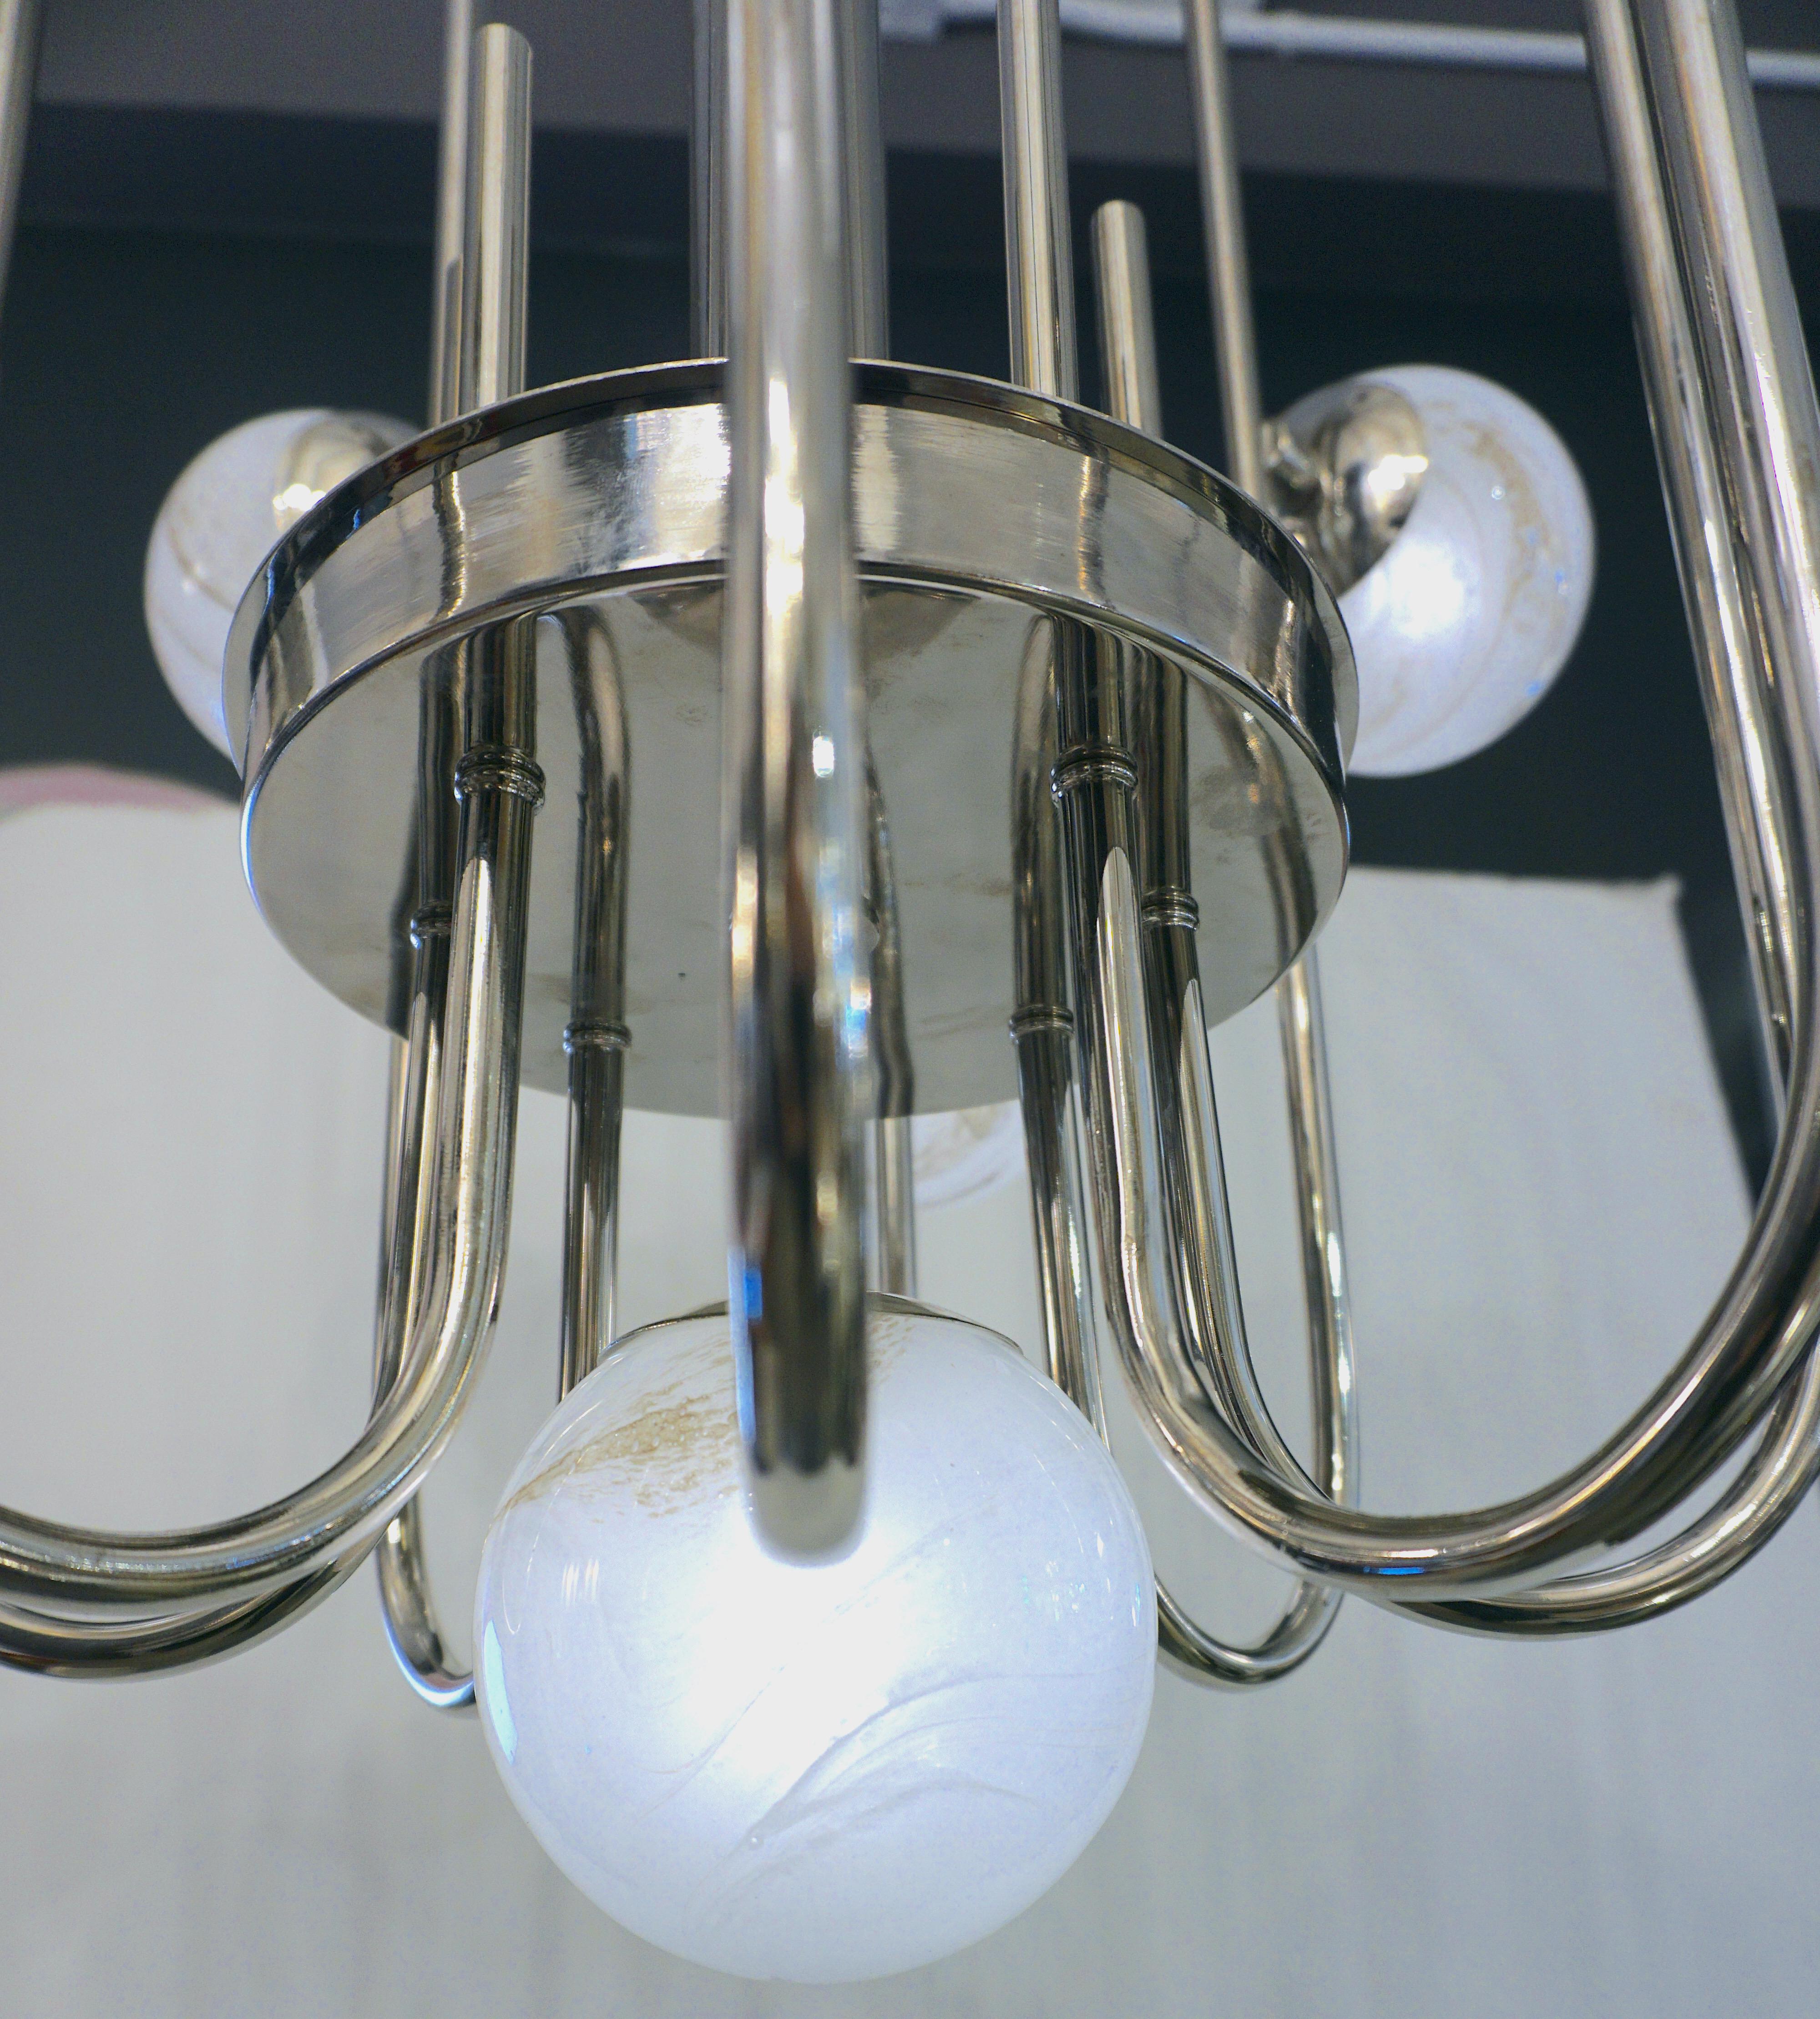 Bespoke Italian Alabaster White Murano Glass Nickel Curved Globe Chandelier For Sale 8